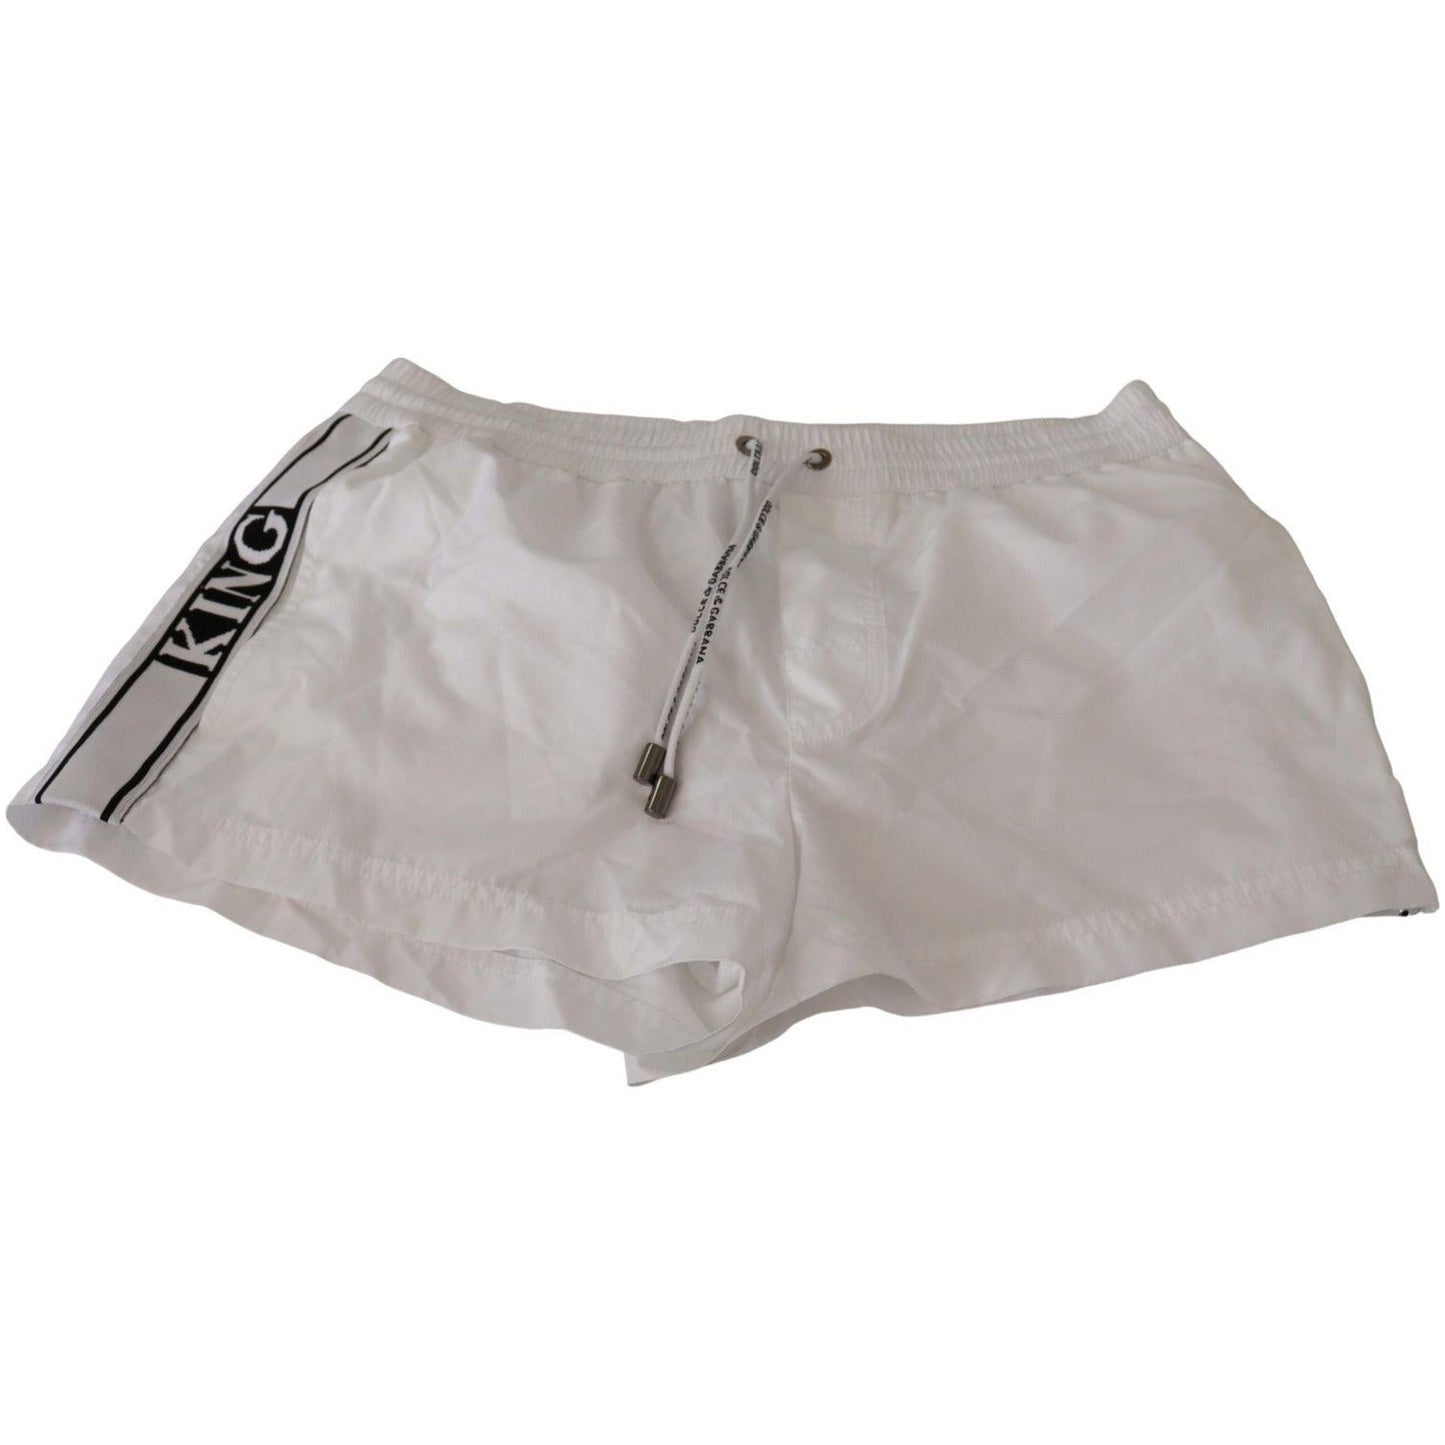 Dolce & Gabbana Elegant White KING Motive Swim Trunks white-king-mens-beachwear-swimwear-shorts